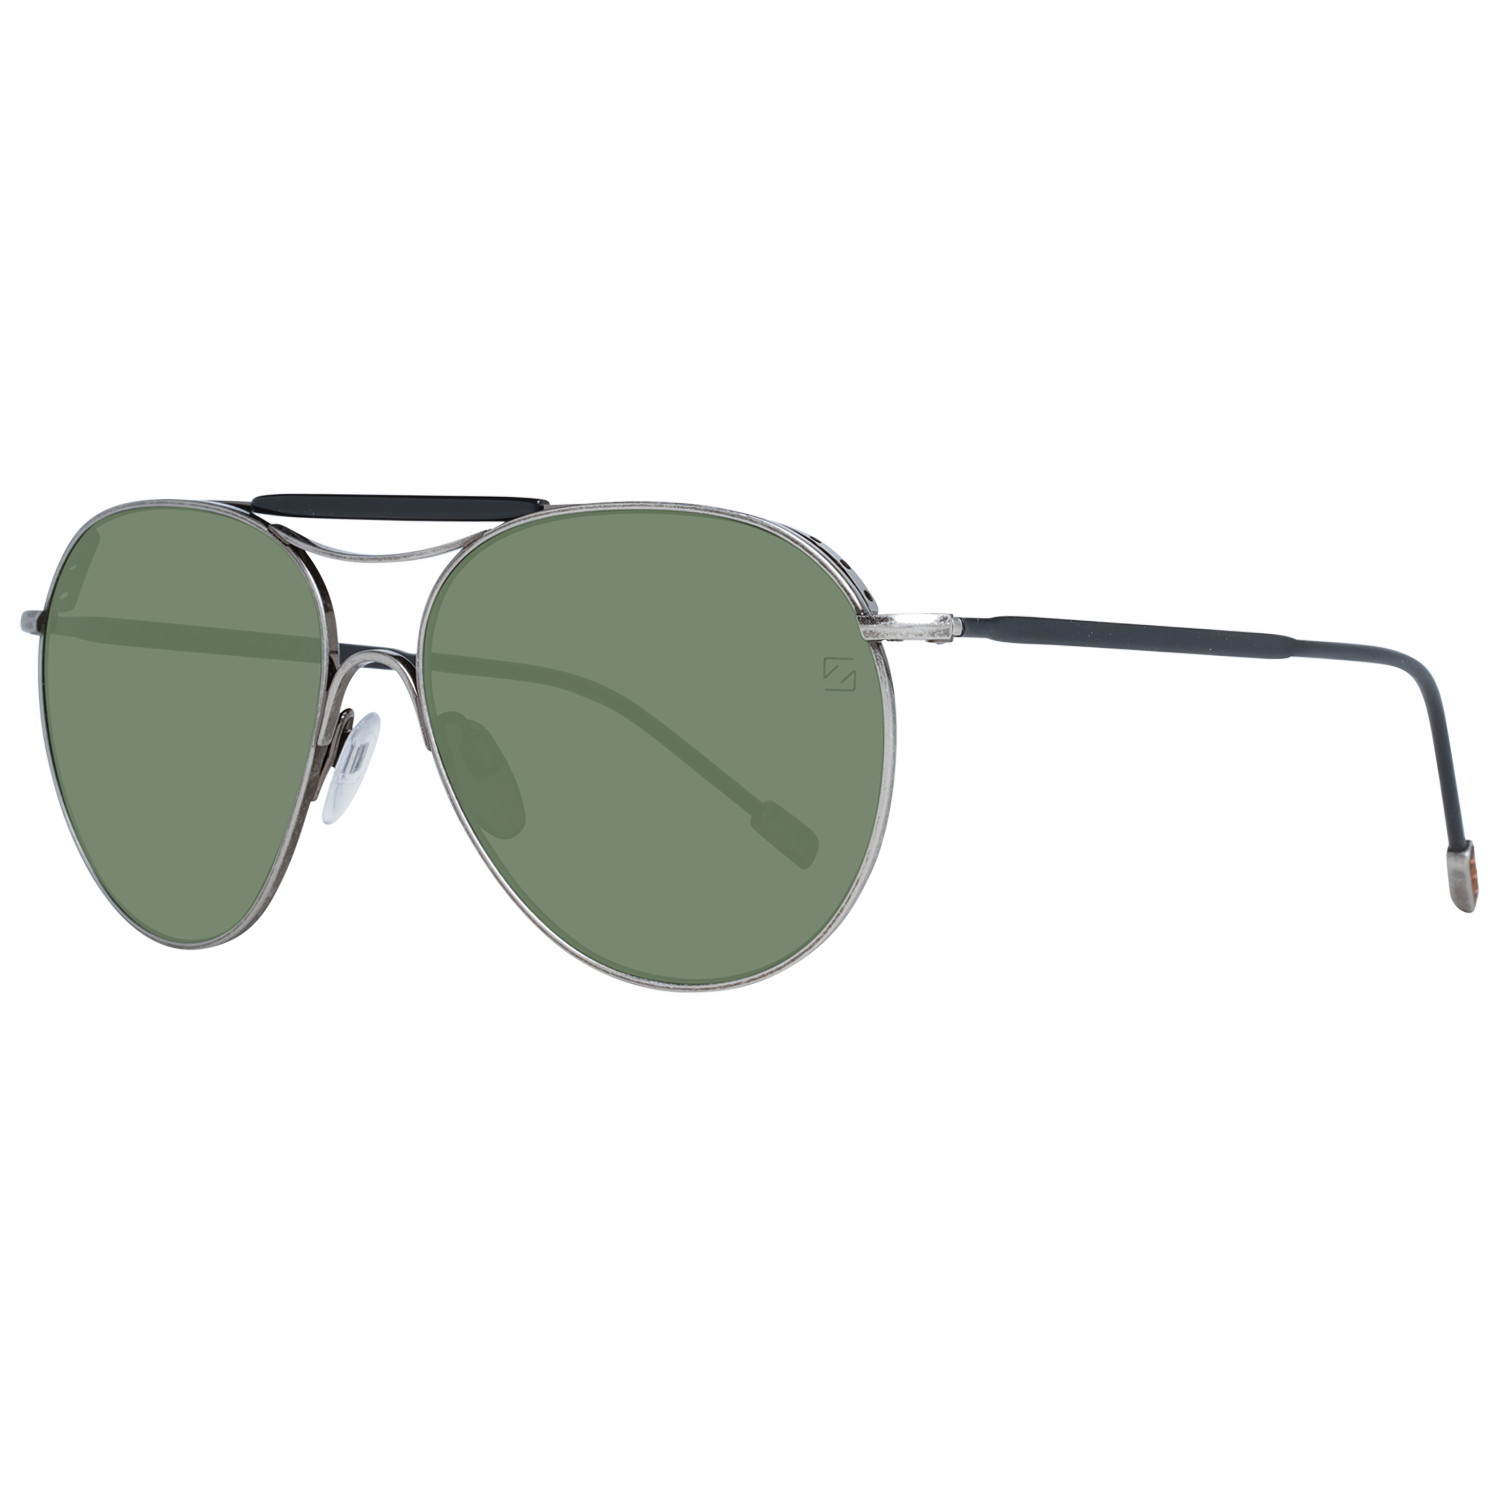 Zegna Couture Sunglasses Zegna Couture Sunglasses ZC0021 57 13N Titanium Eyeglasses Eyewear UK USA Australia 